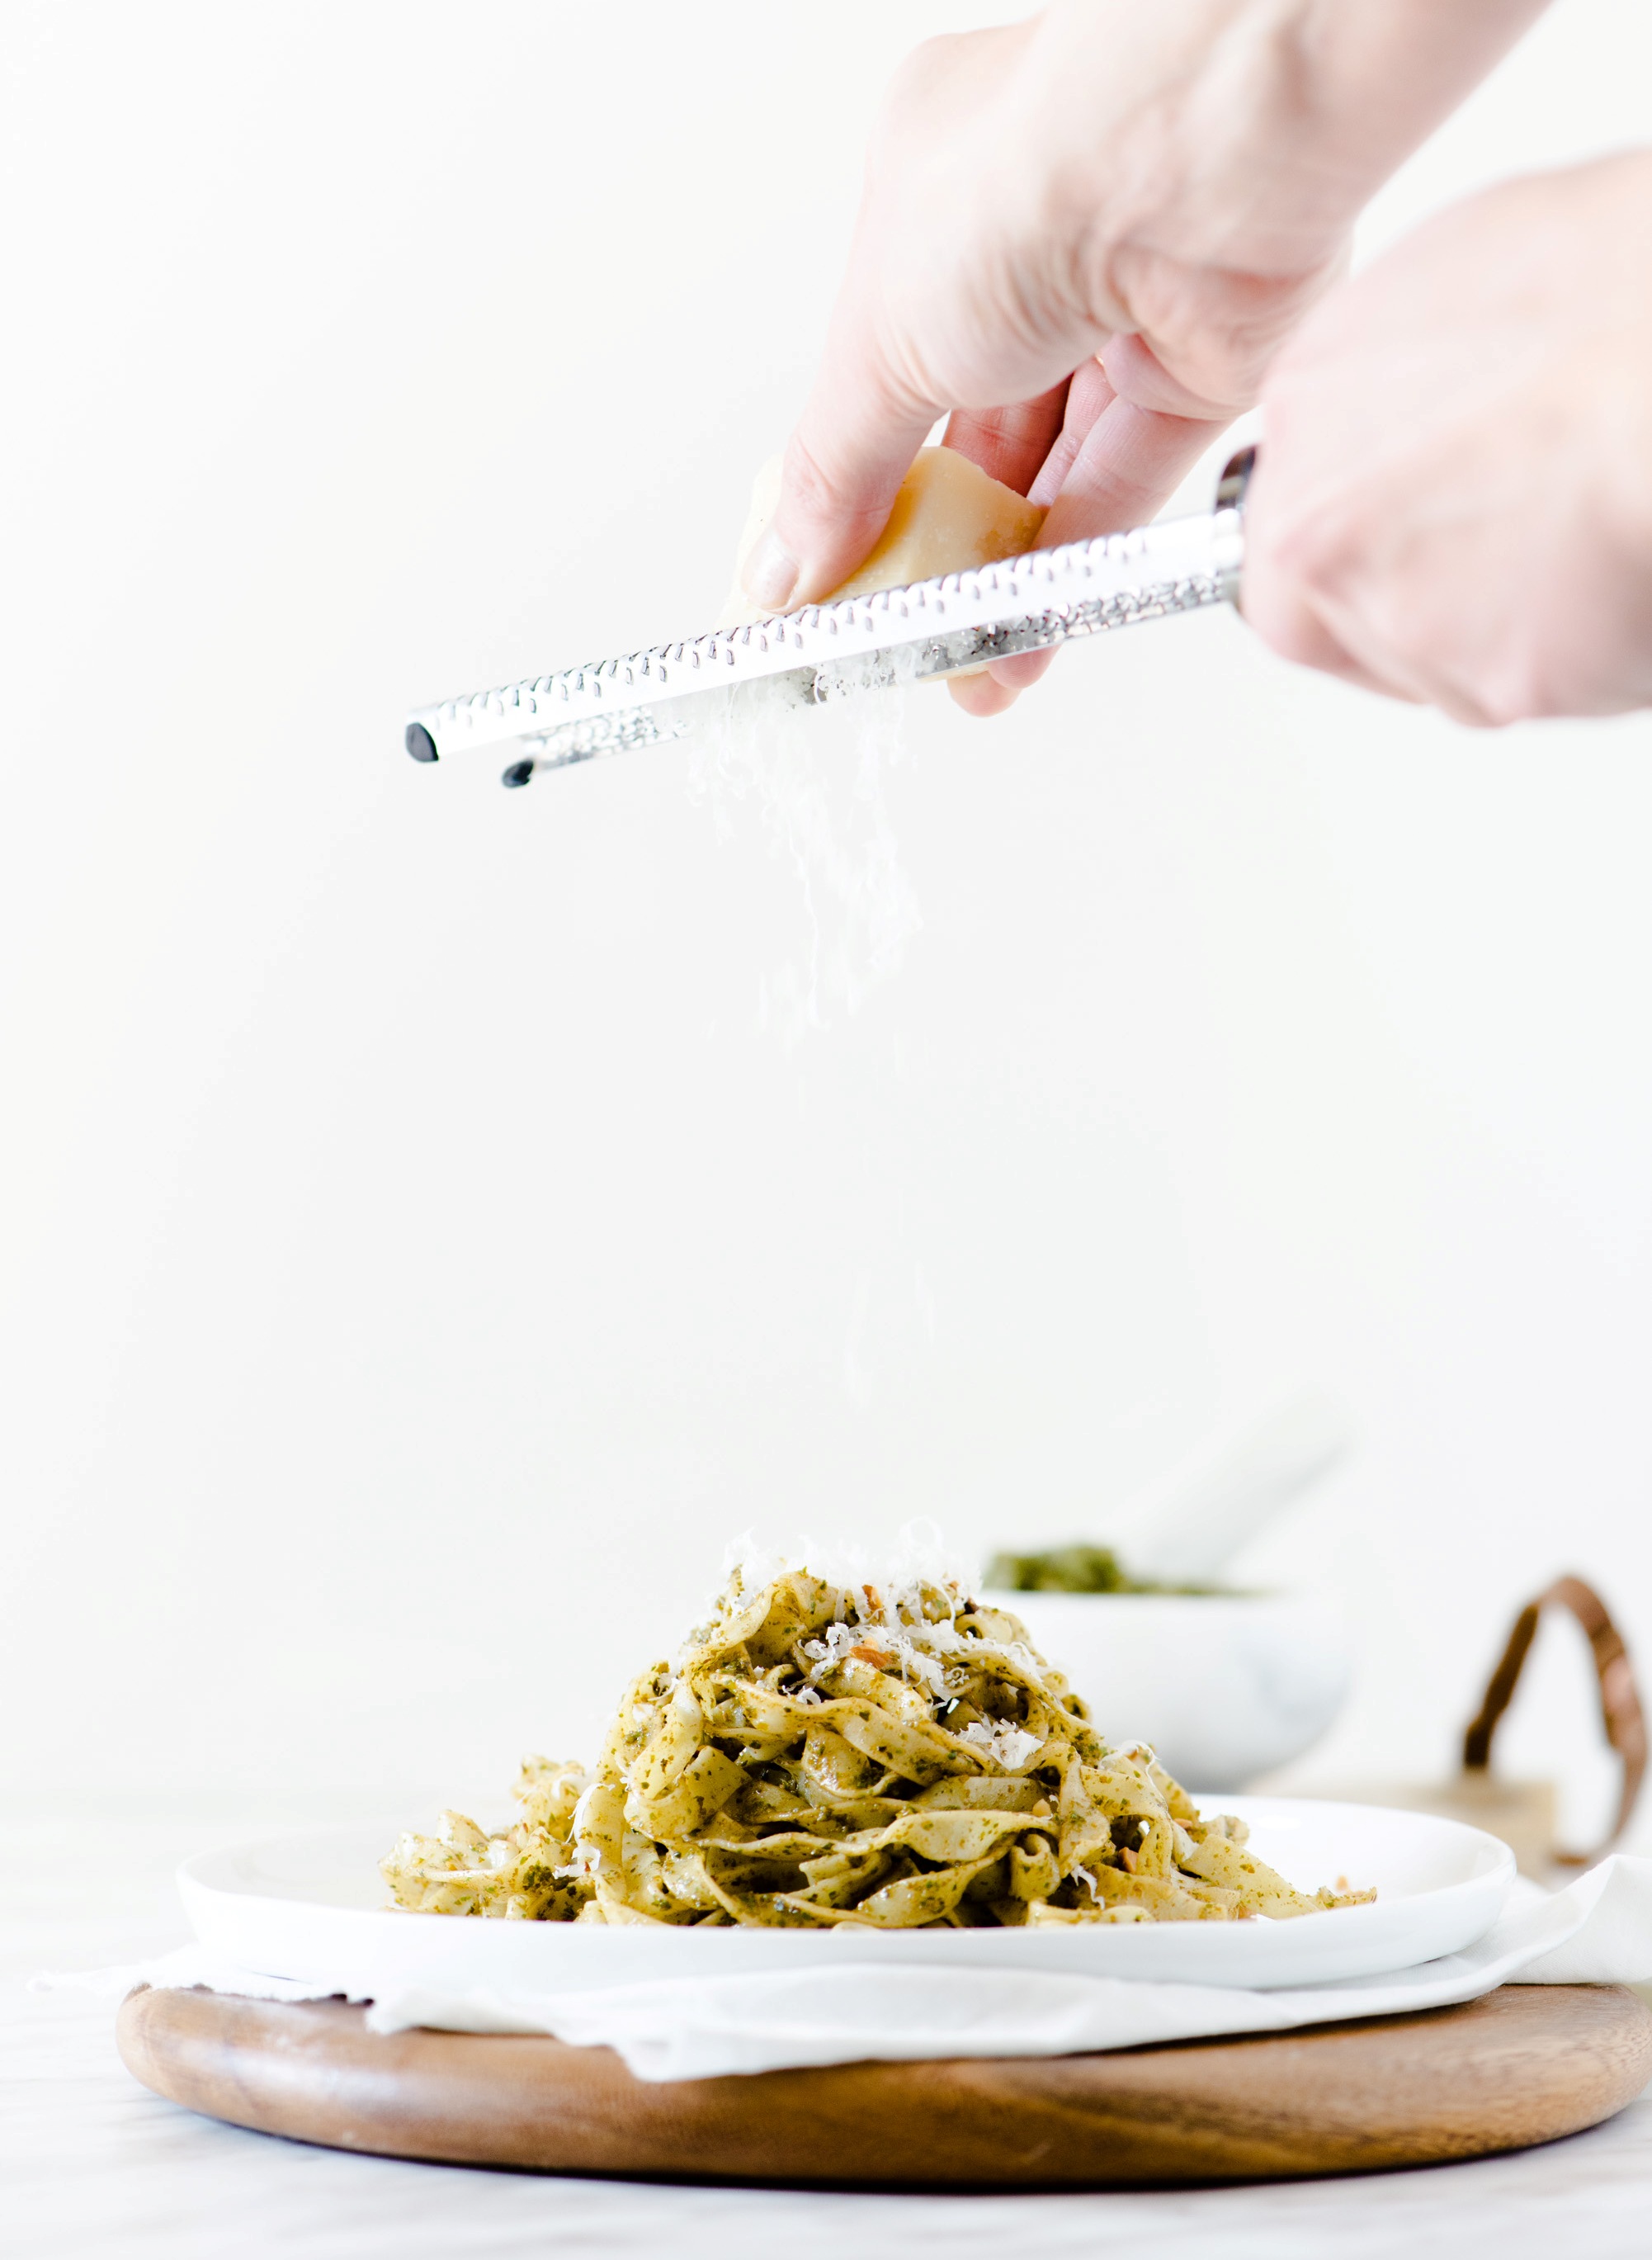 Pesto & Fettuccine - Fresh pasta, topped with pesto & almonds.